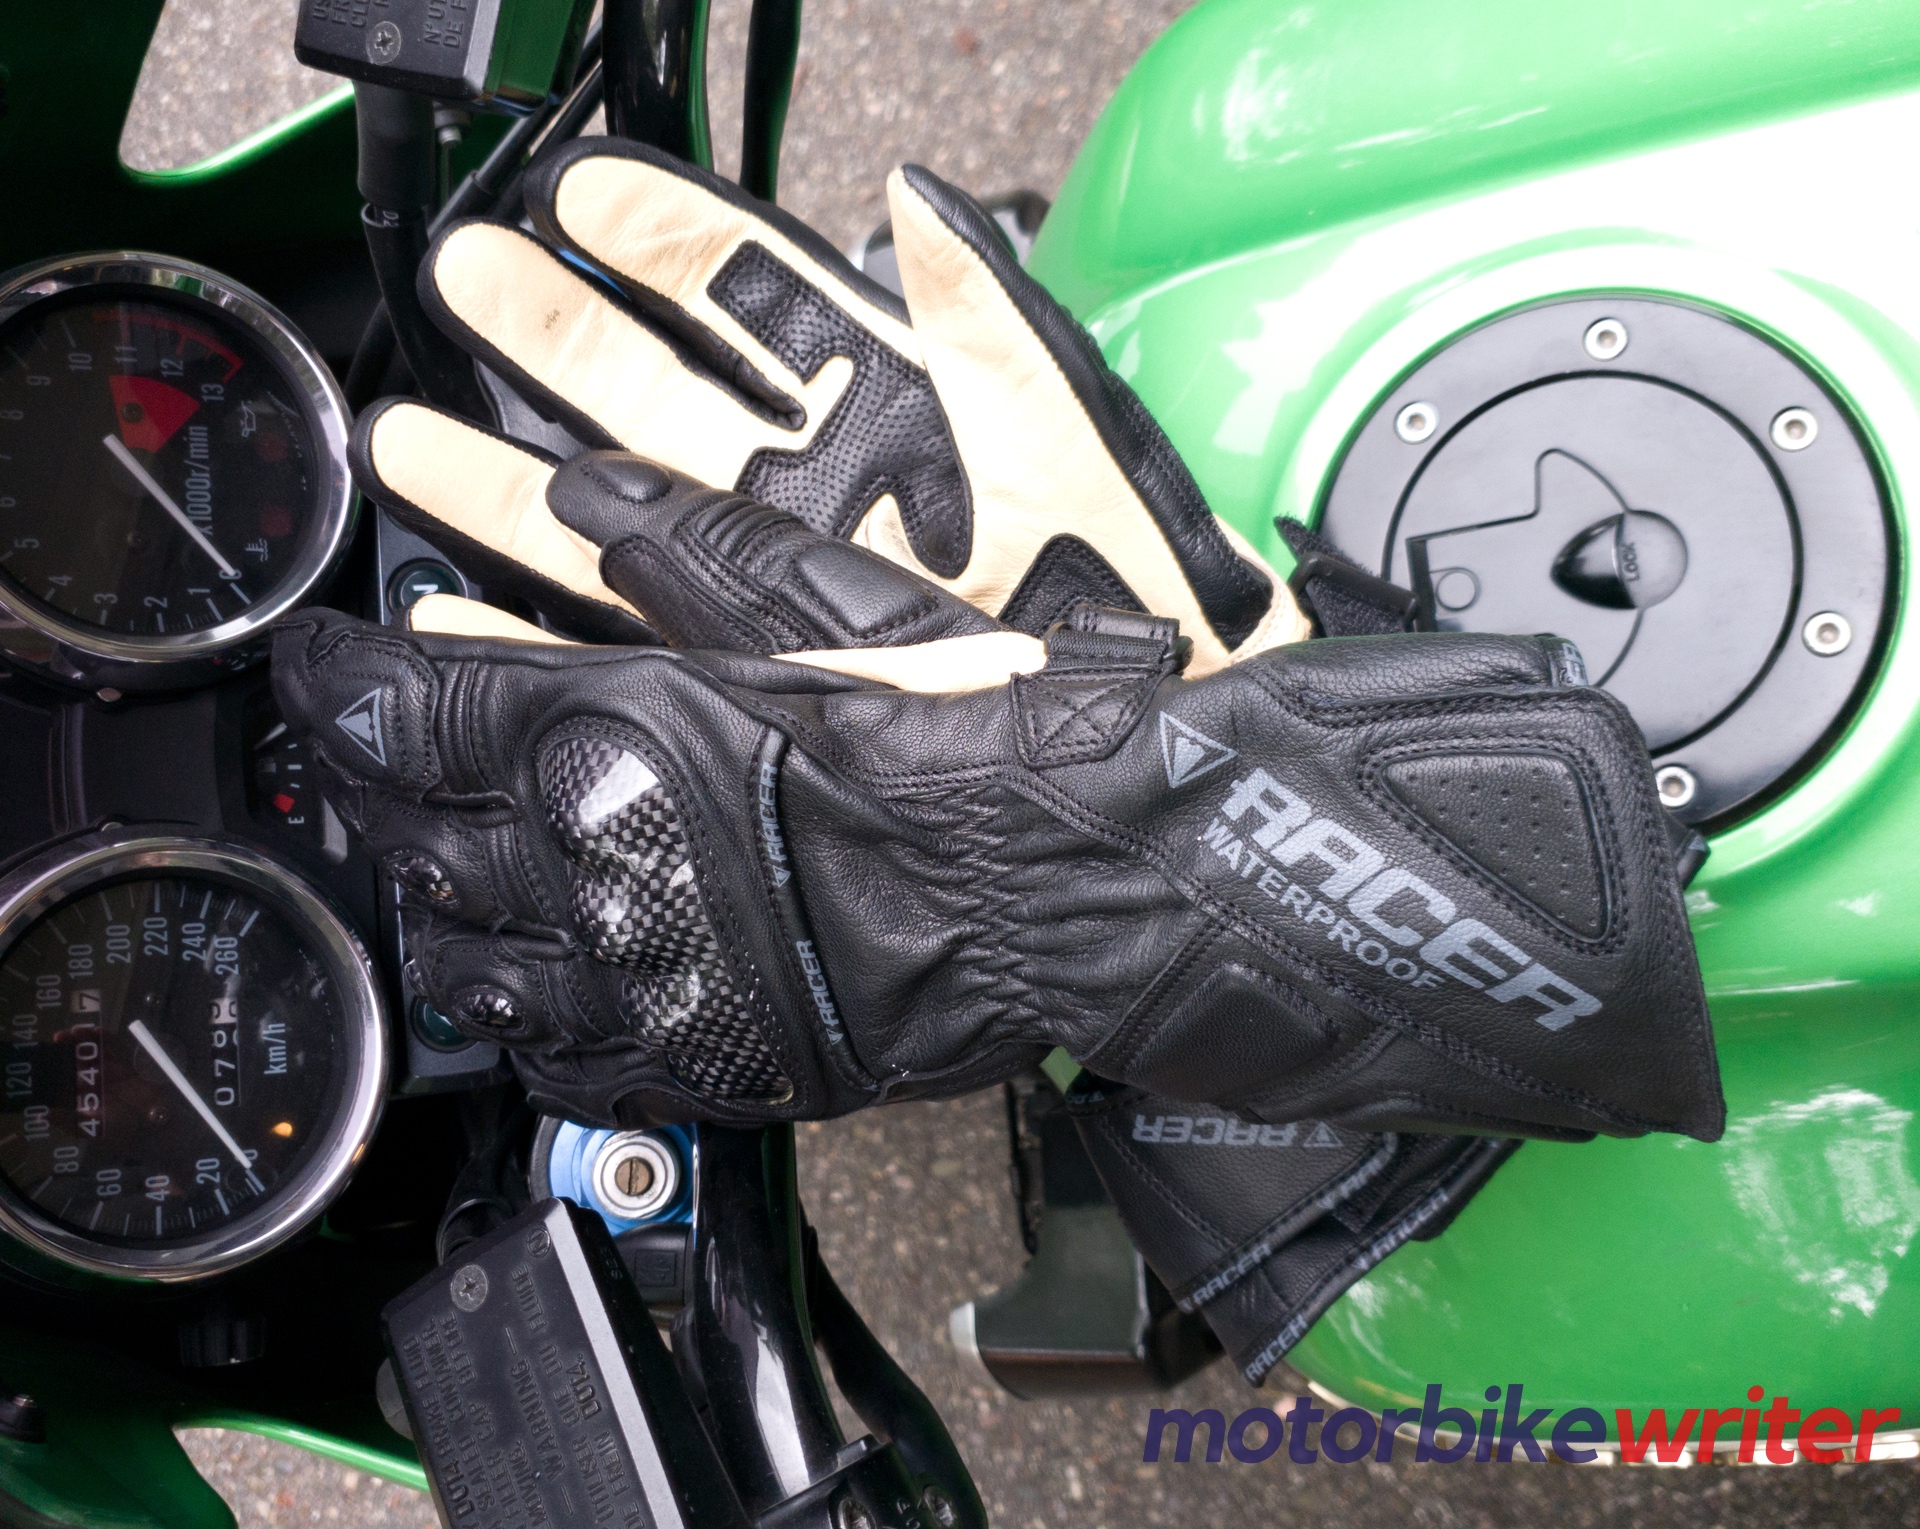 Racer Multitop 2 Waterproof Gloves sitting on green motorcycle fuel tank